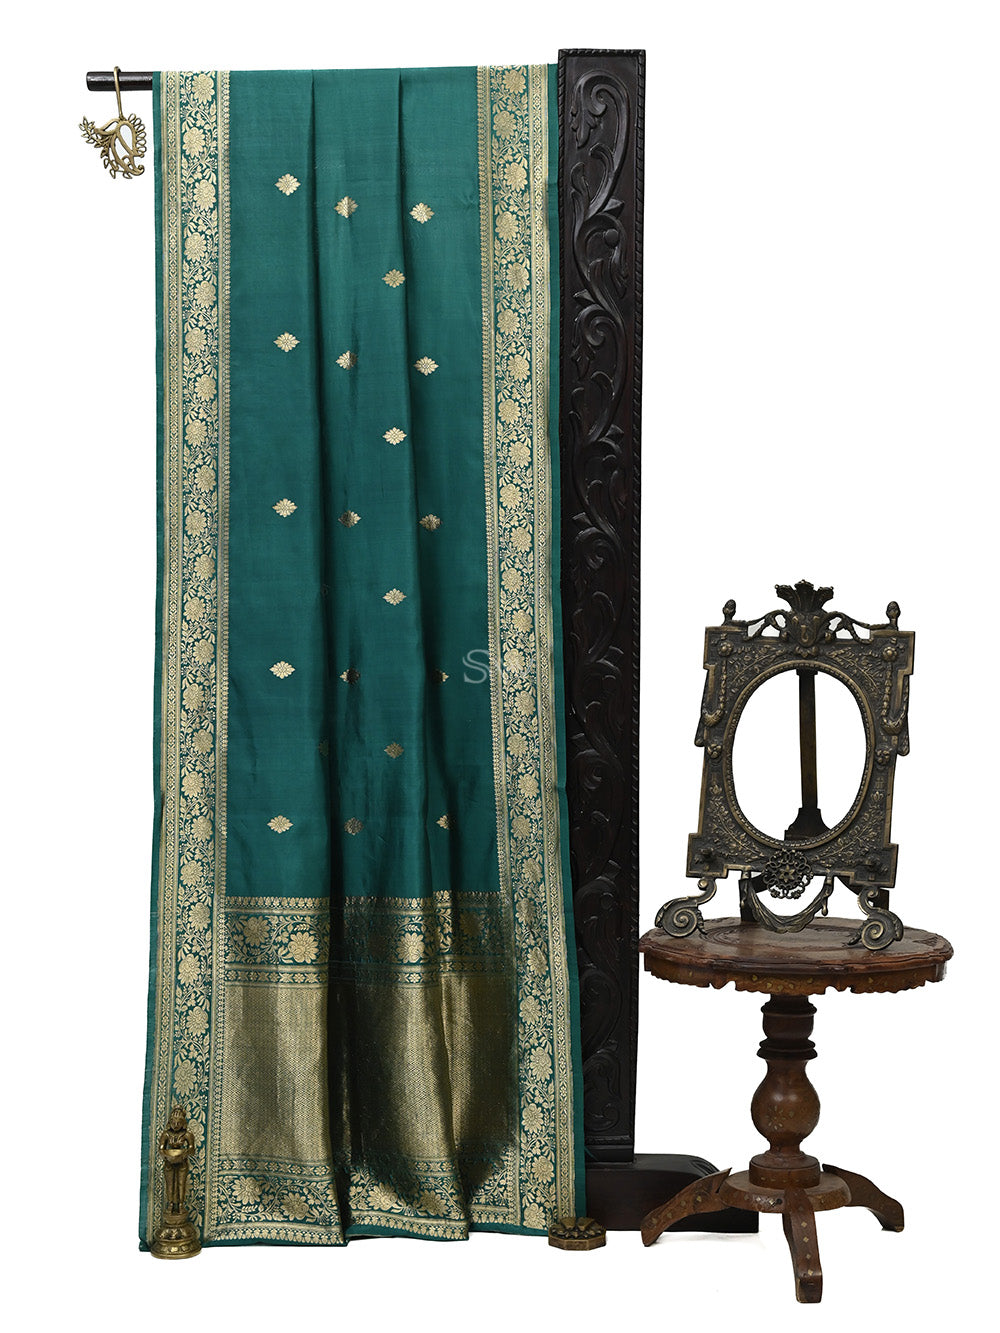 Teal Green Booti Chiniya Silk Handloom Banarasi Saree Sacred Weaves